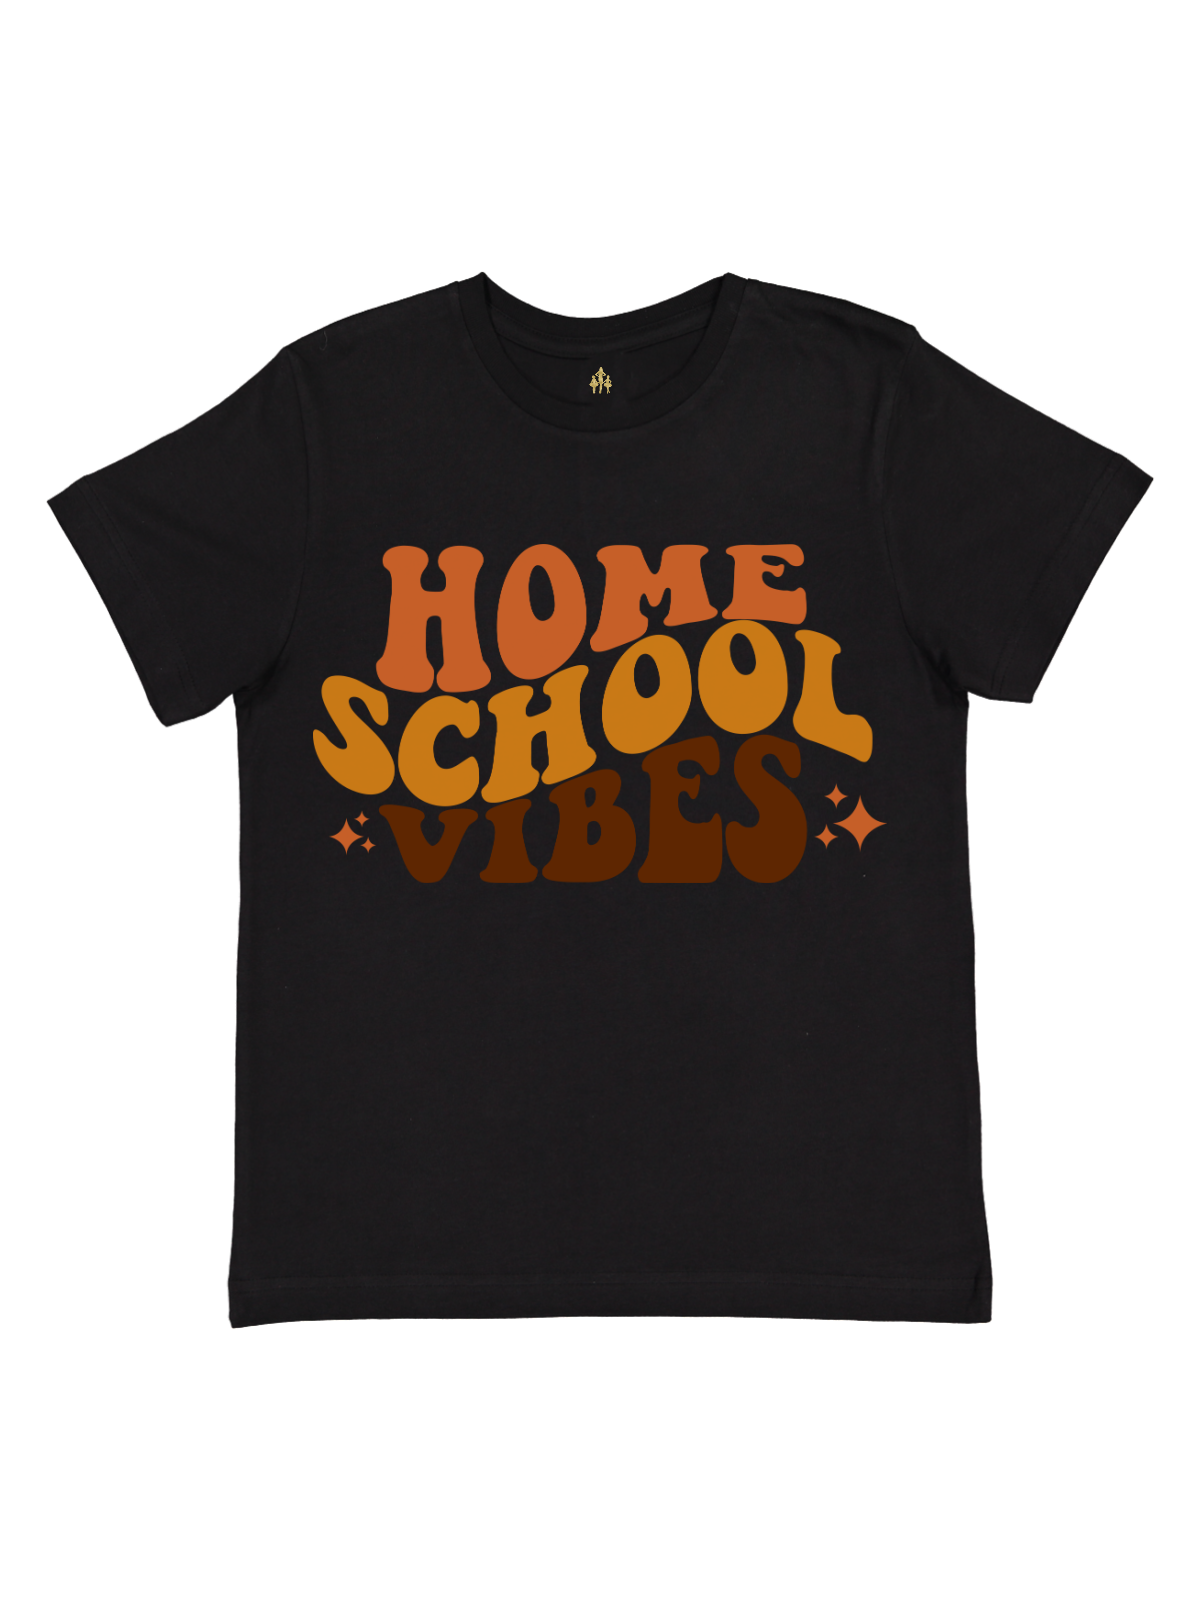 Homeschool Vibes Kids Shirt in Black